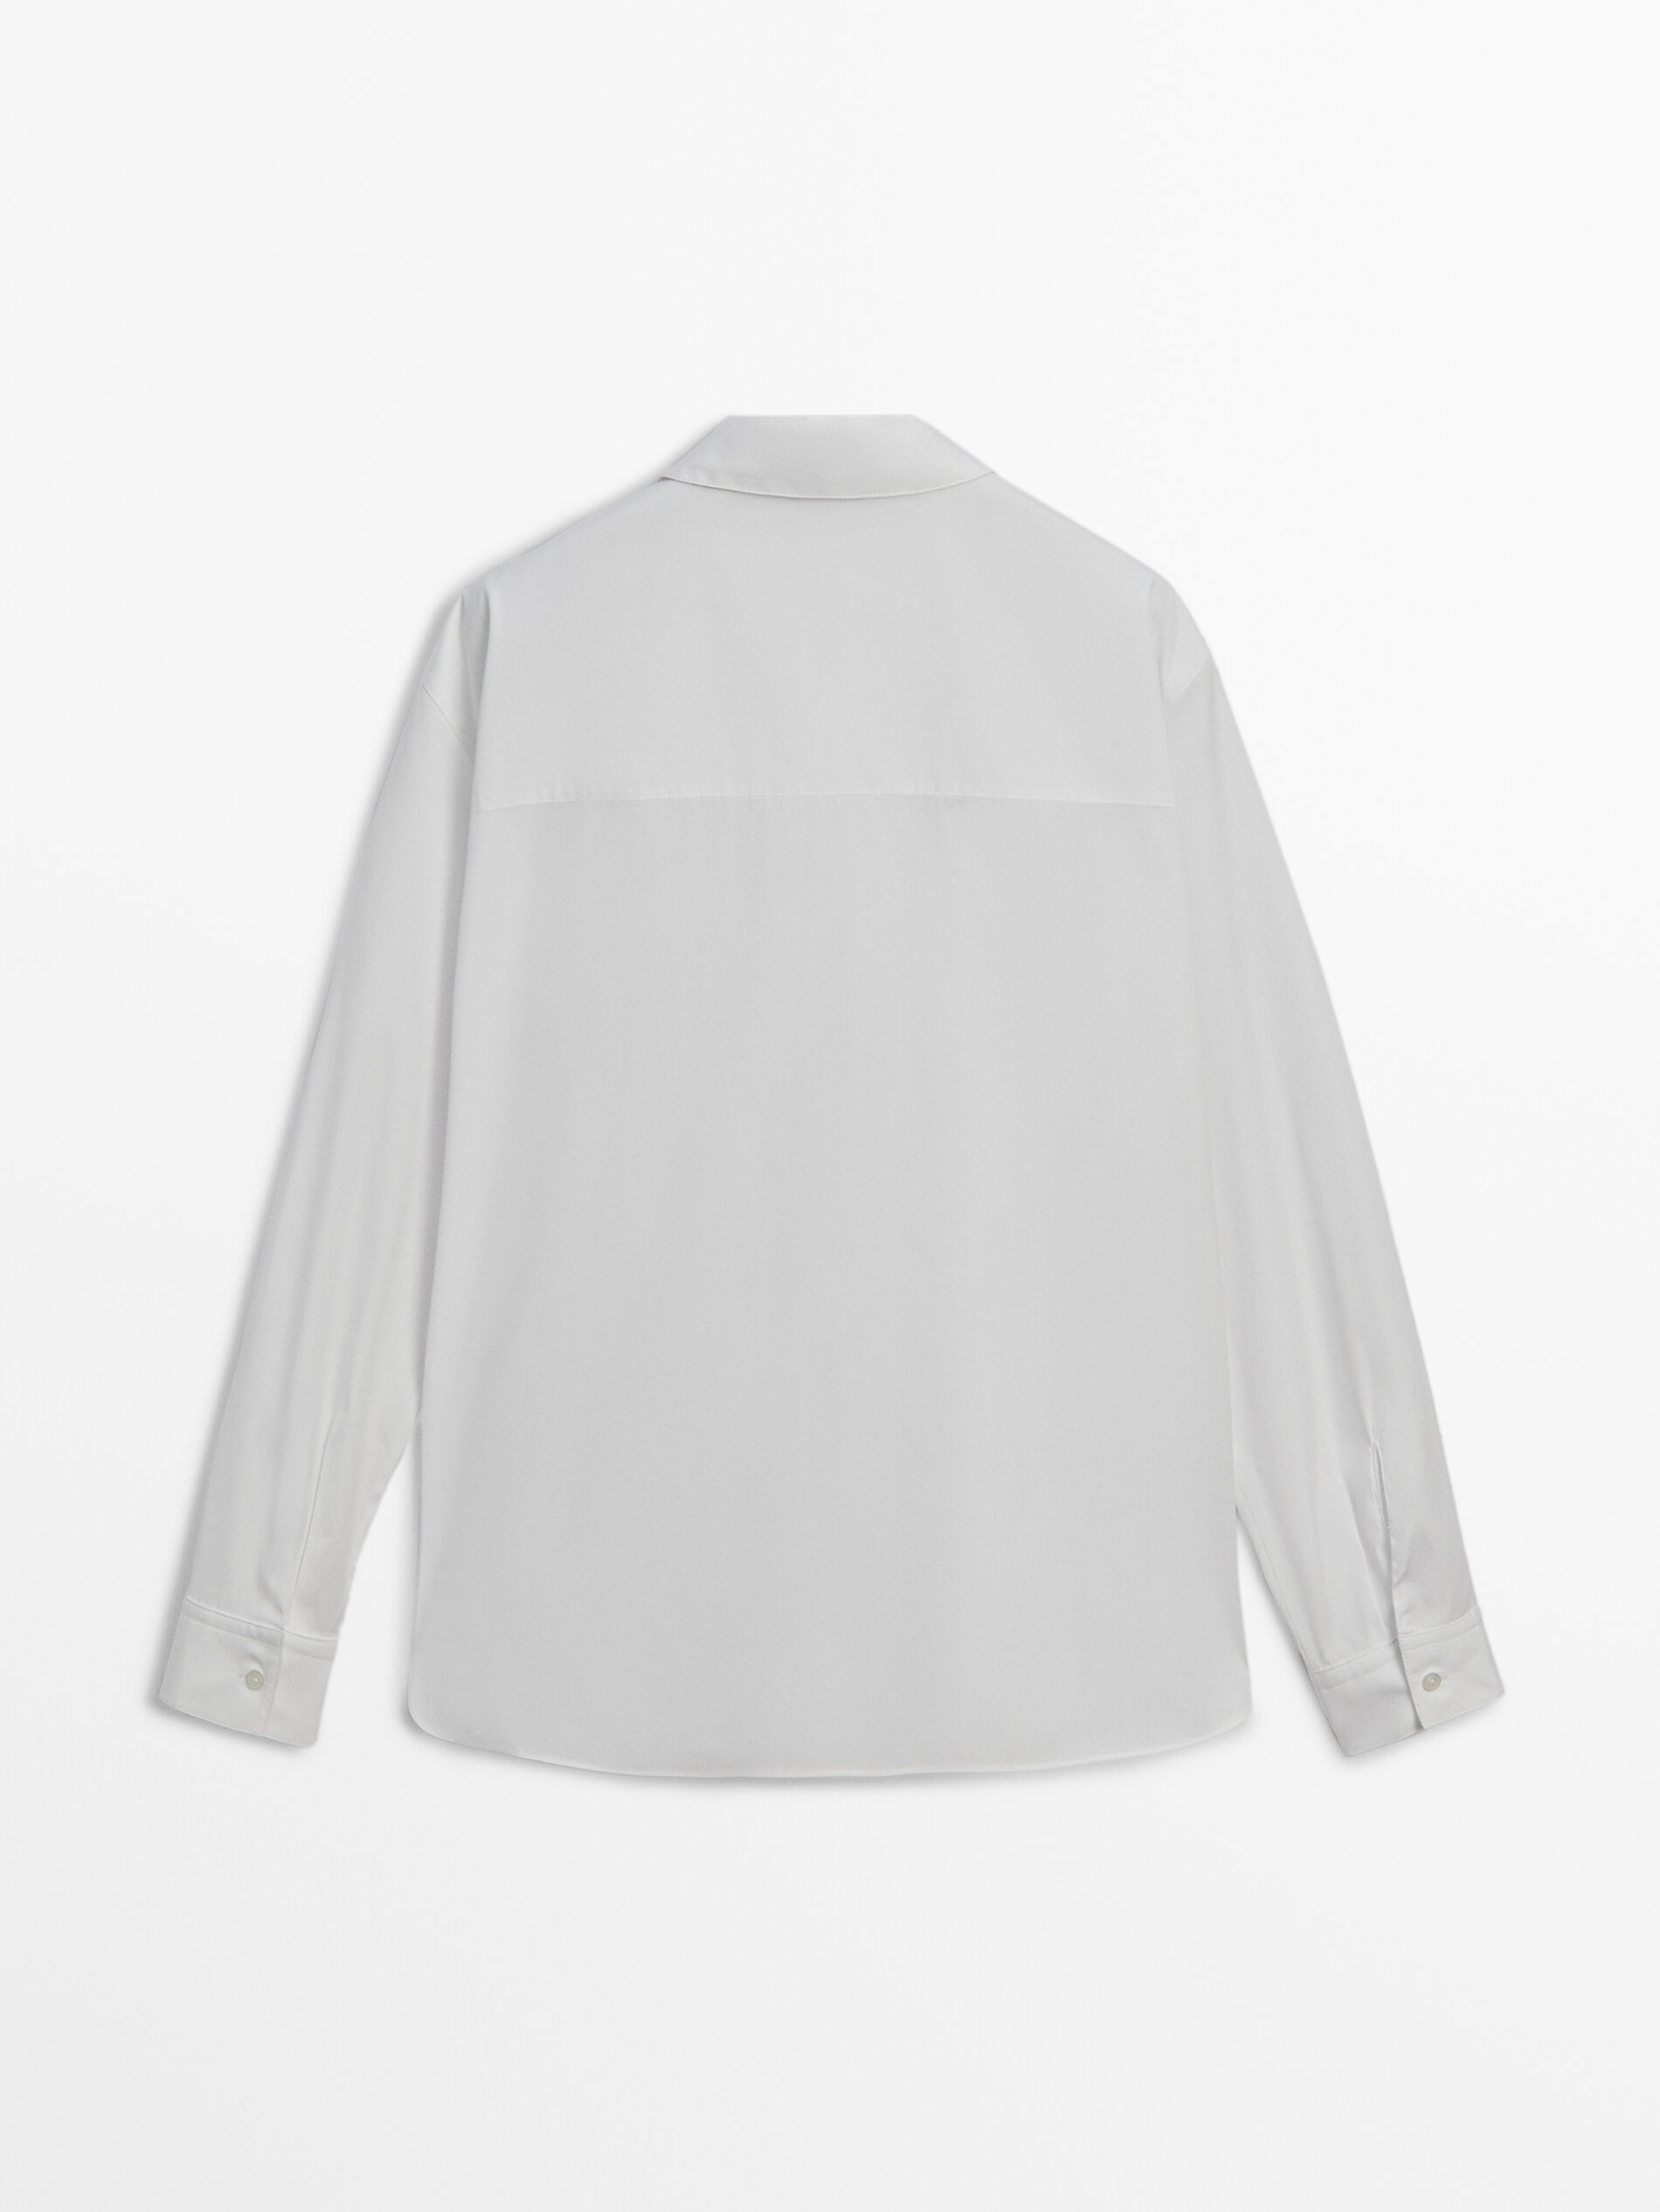 Poplin shirt 100% cotton pocket